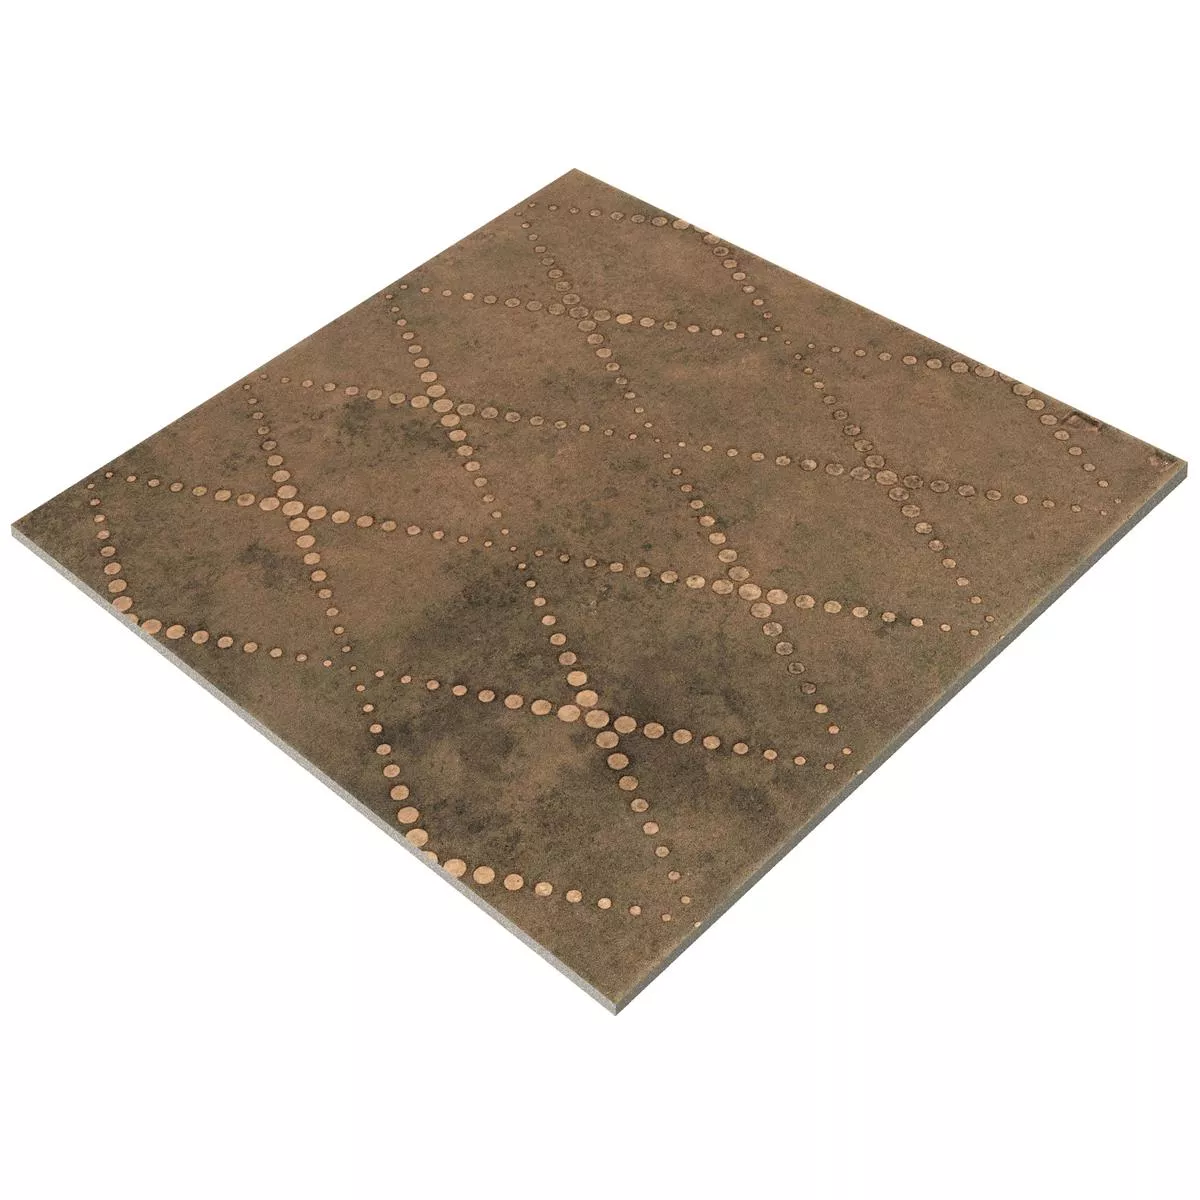 Podlahové Dlaždice Chicago Kovový Vzhled Bronzová R9 - 18,5x18,5cm - 2